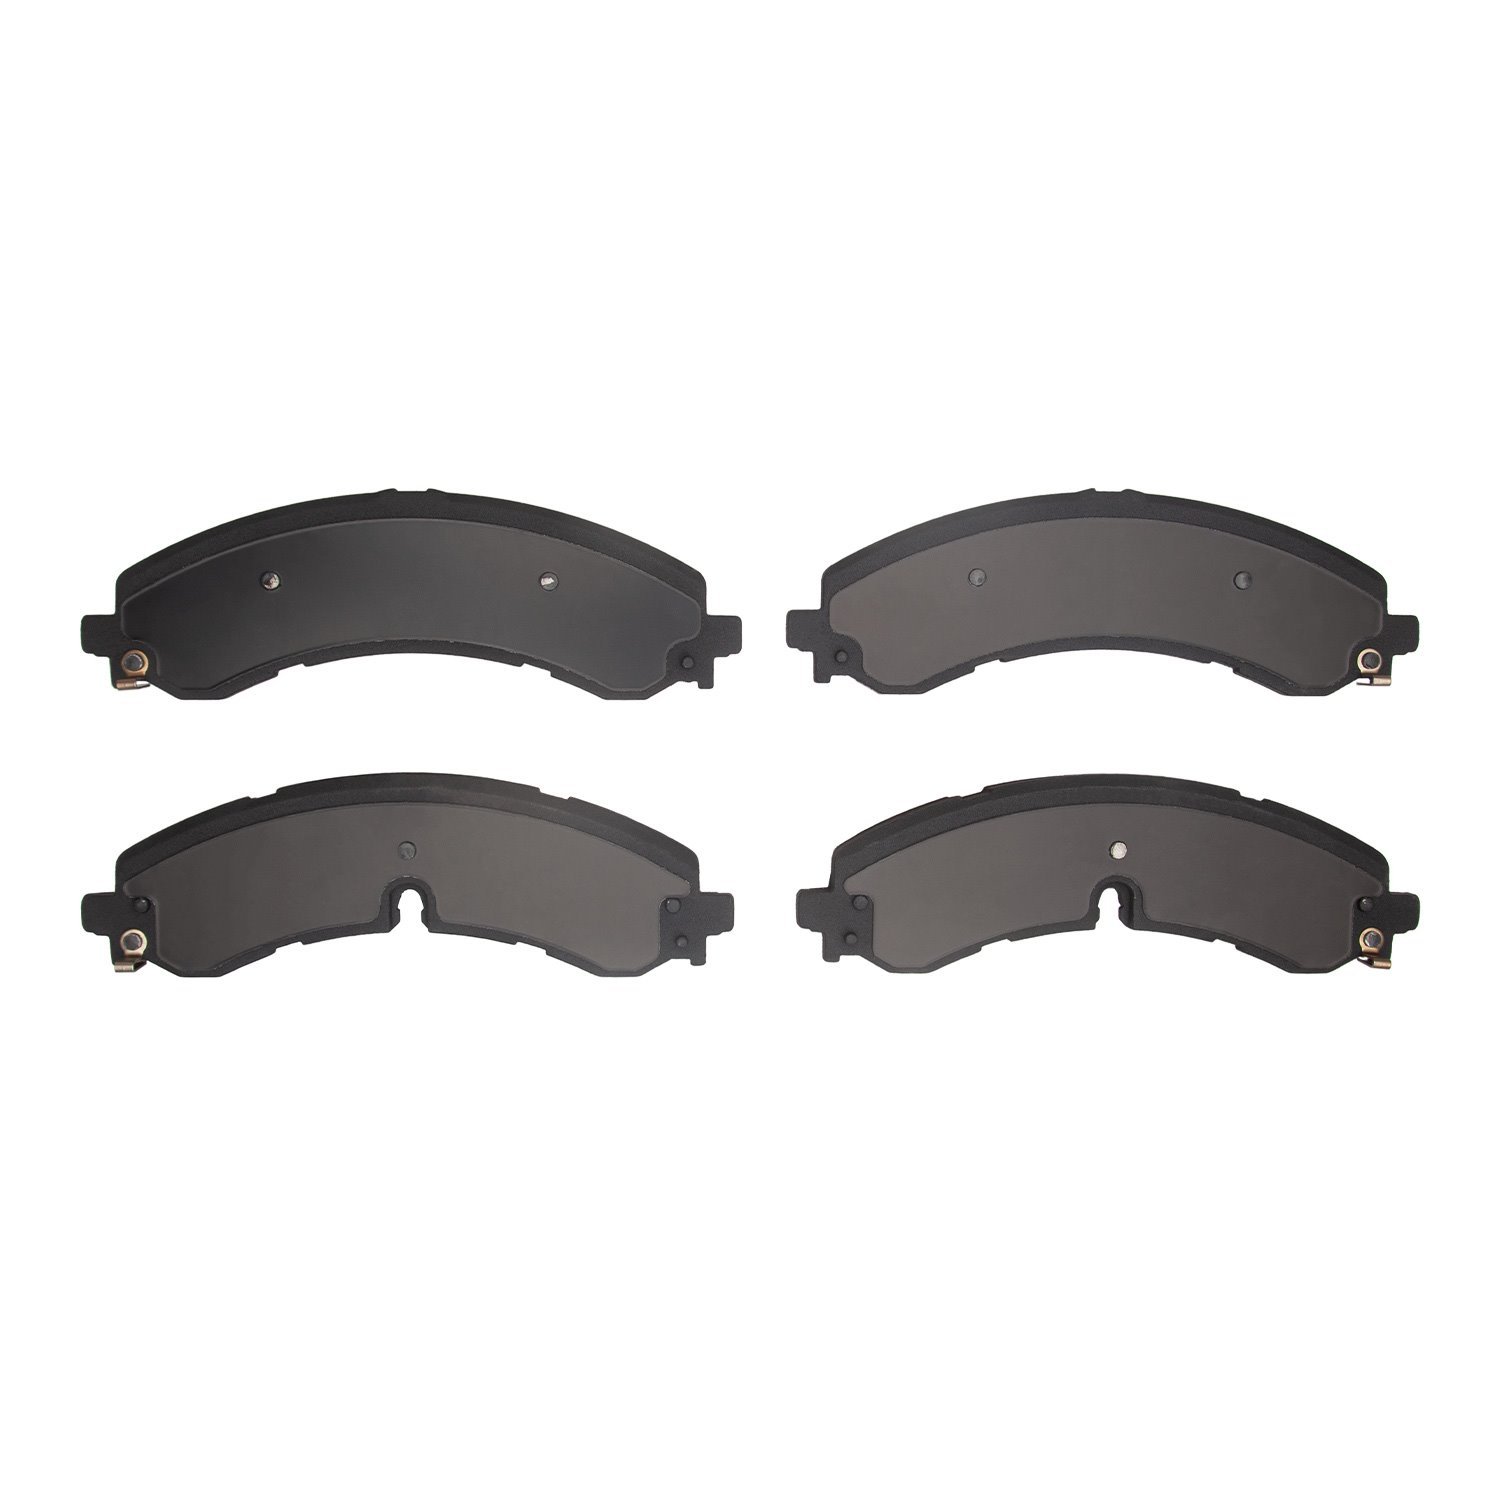 1310-2250-01 3000-Series Ceramic Brake Pads & Hardware Kit, Fits Select GM, Position: Rear,Front